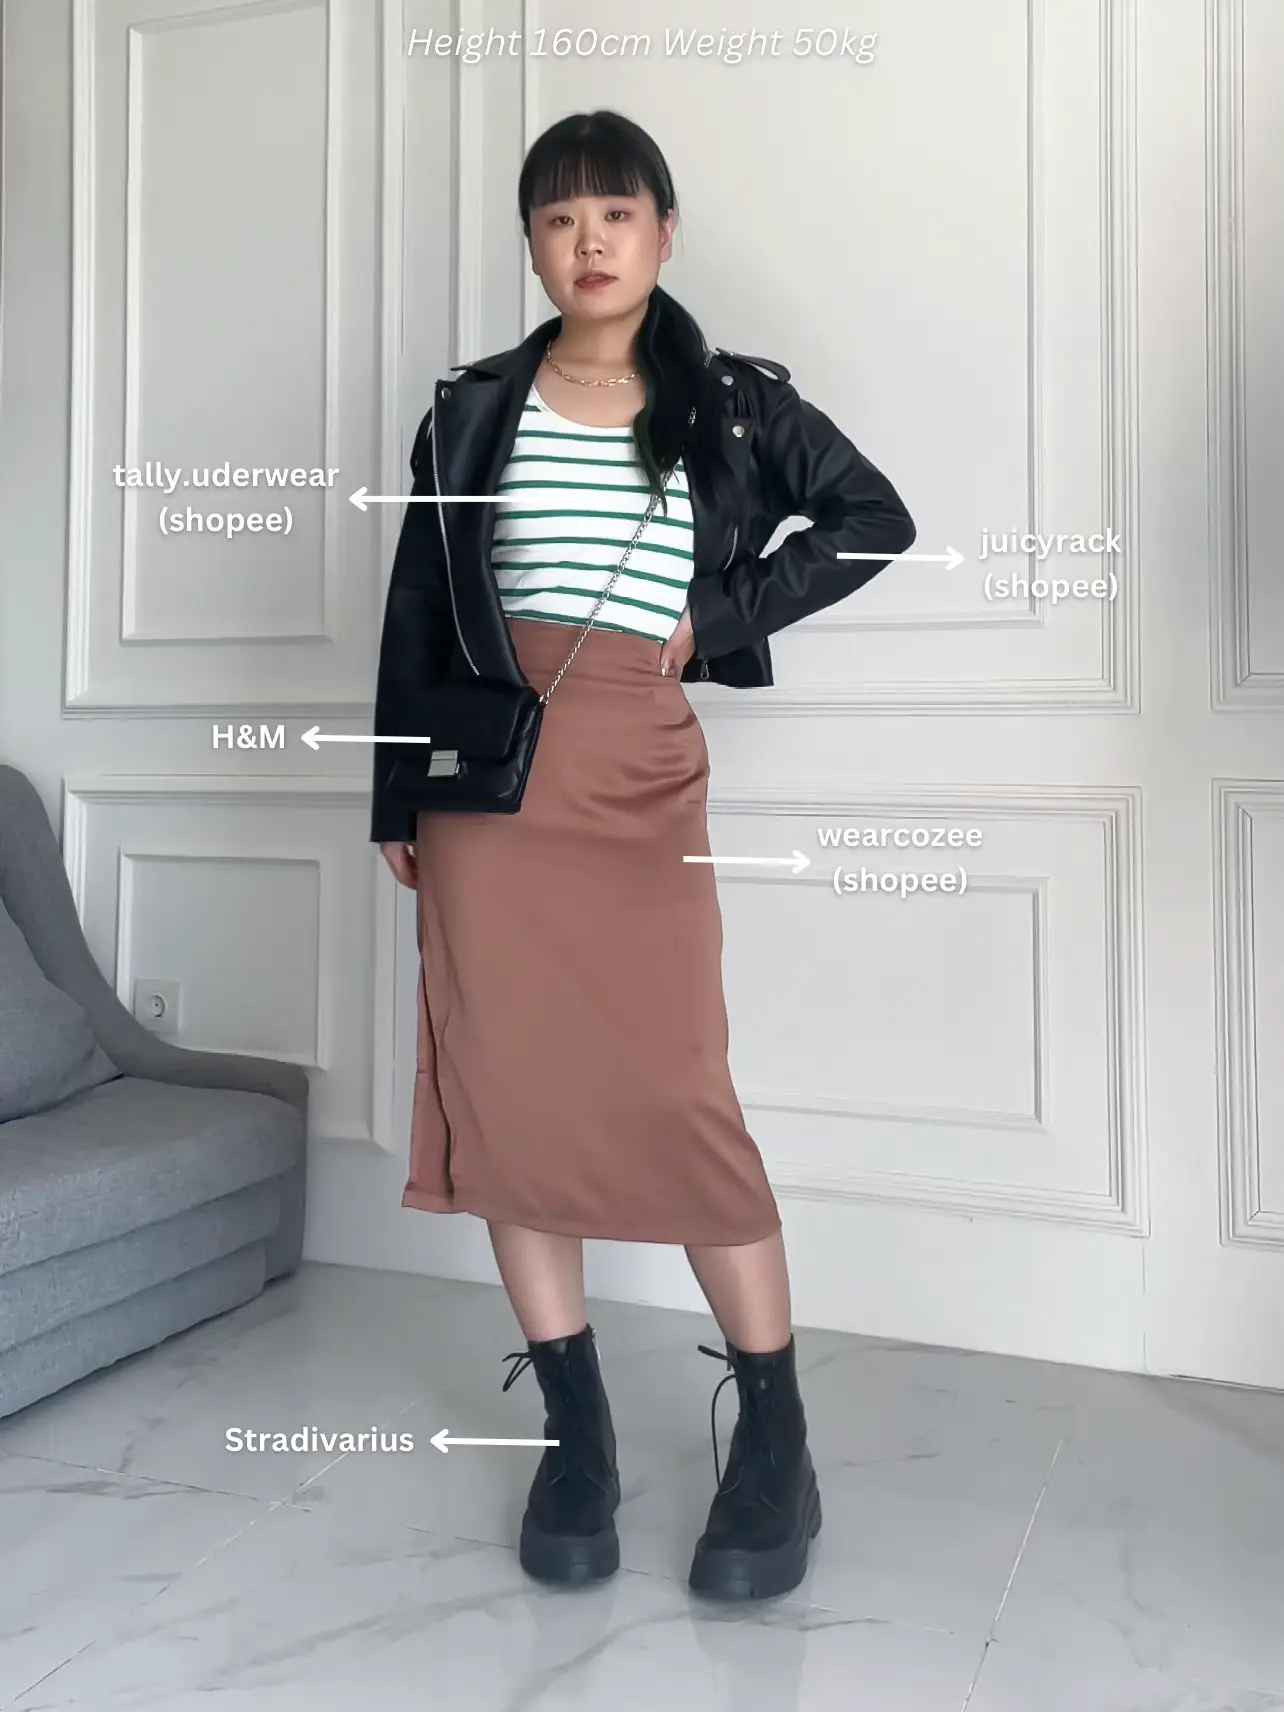 Recreating Pinterest Outfits Wearing Bralette!, Video dipublikasikan oleh  Caren Michele